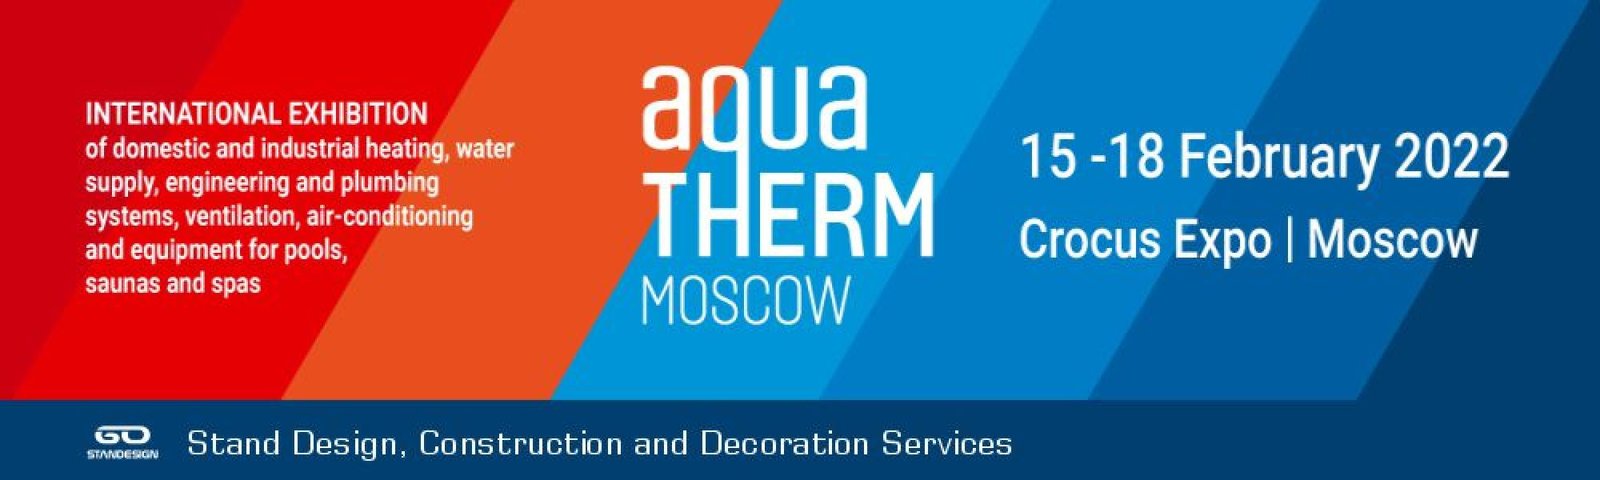 Aquatherm 2022 Exhibition Stand Services, Construction